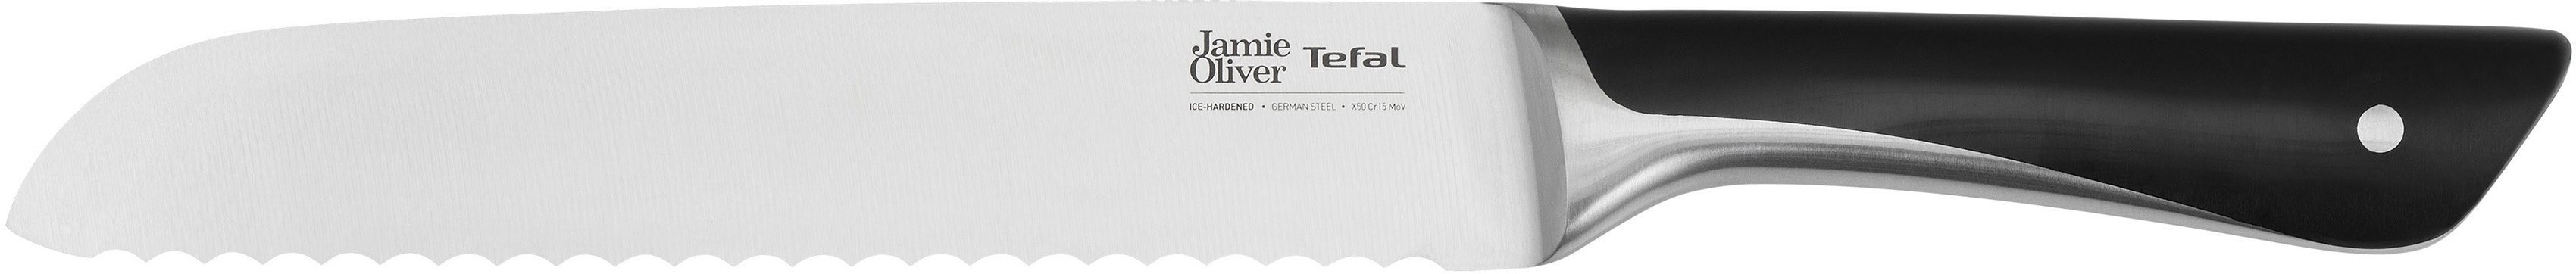 Tefal Brotmesser Jamie Oliver K26703, hohe Leistung, unverwechselbares Design, widerstandsfähig/langlebig